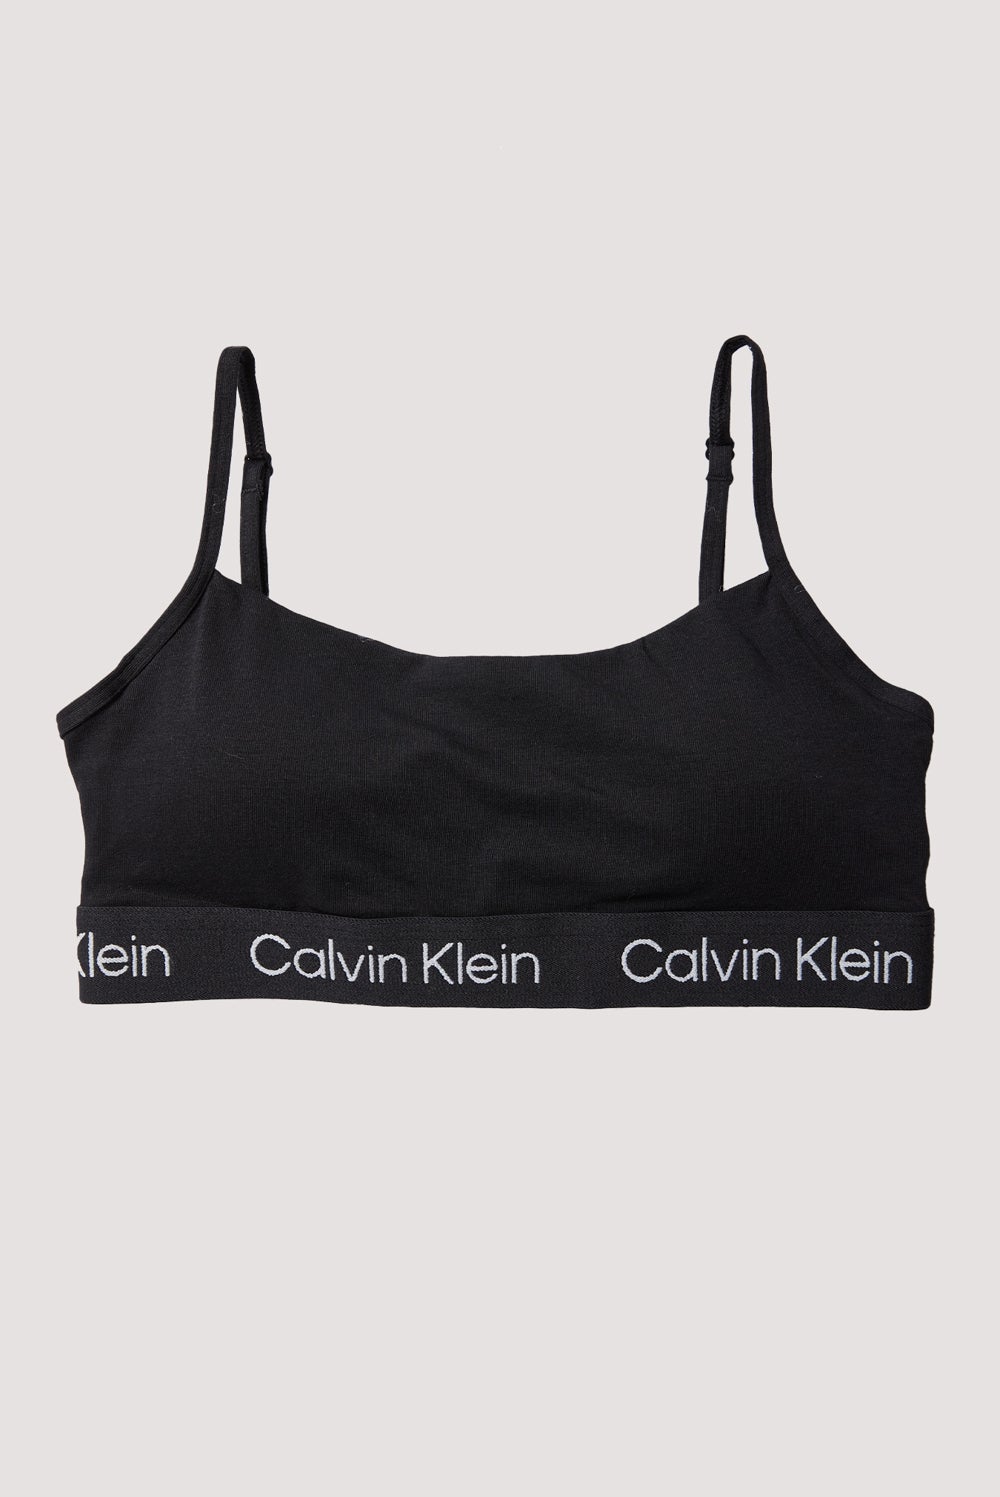 Calvin Klein BLACK 1996 Cotton Lightly Lined Bralette, US X-Large 